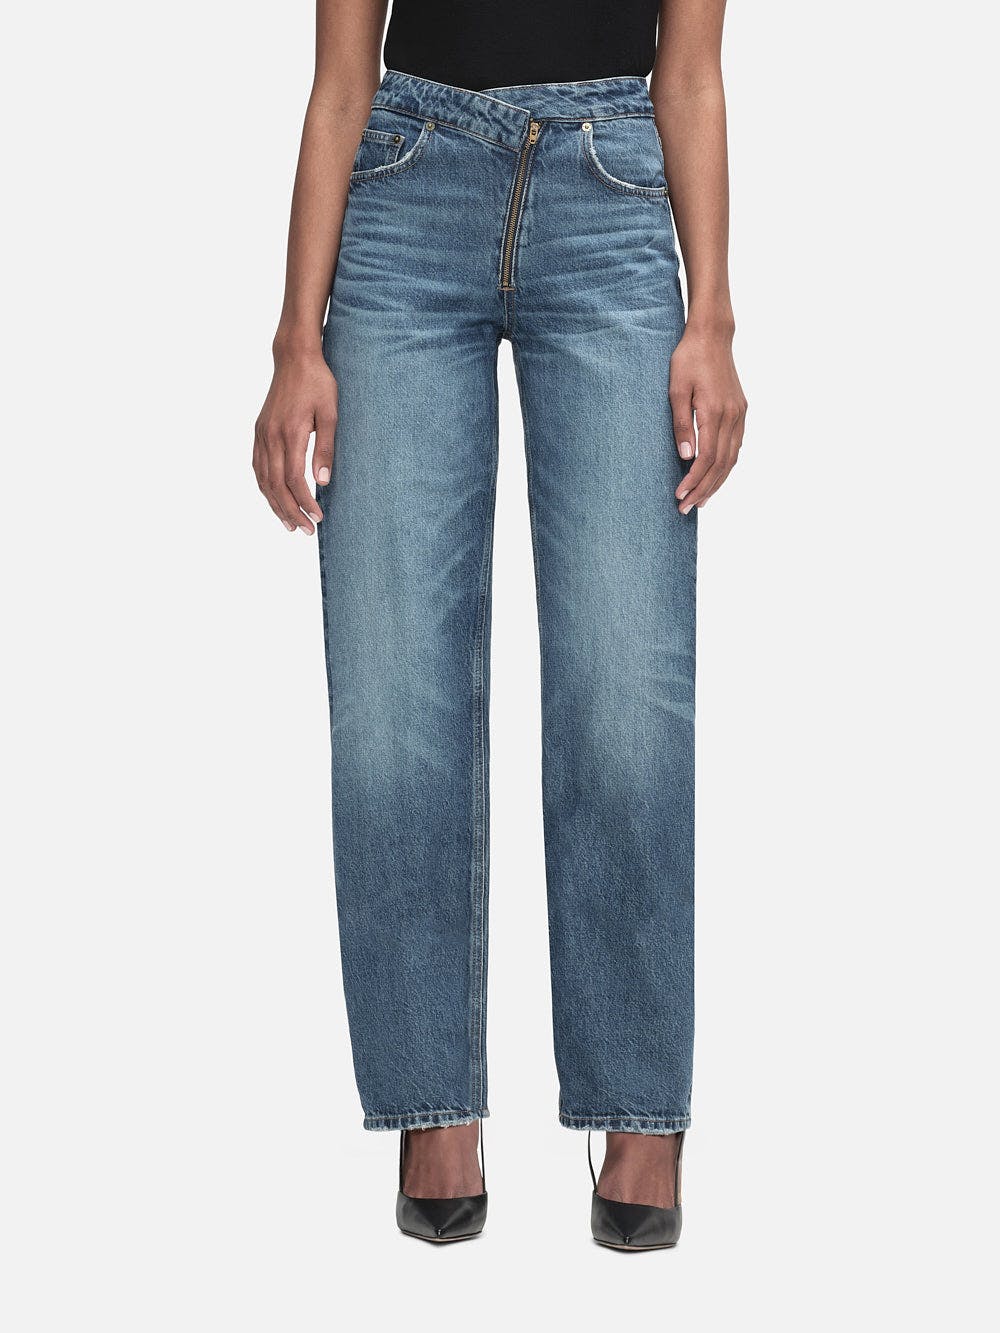 Angled Zipper Long Barrel Jean